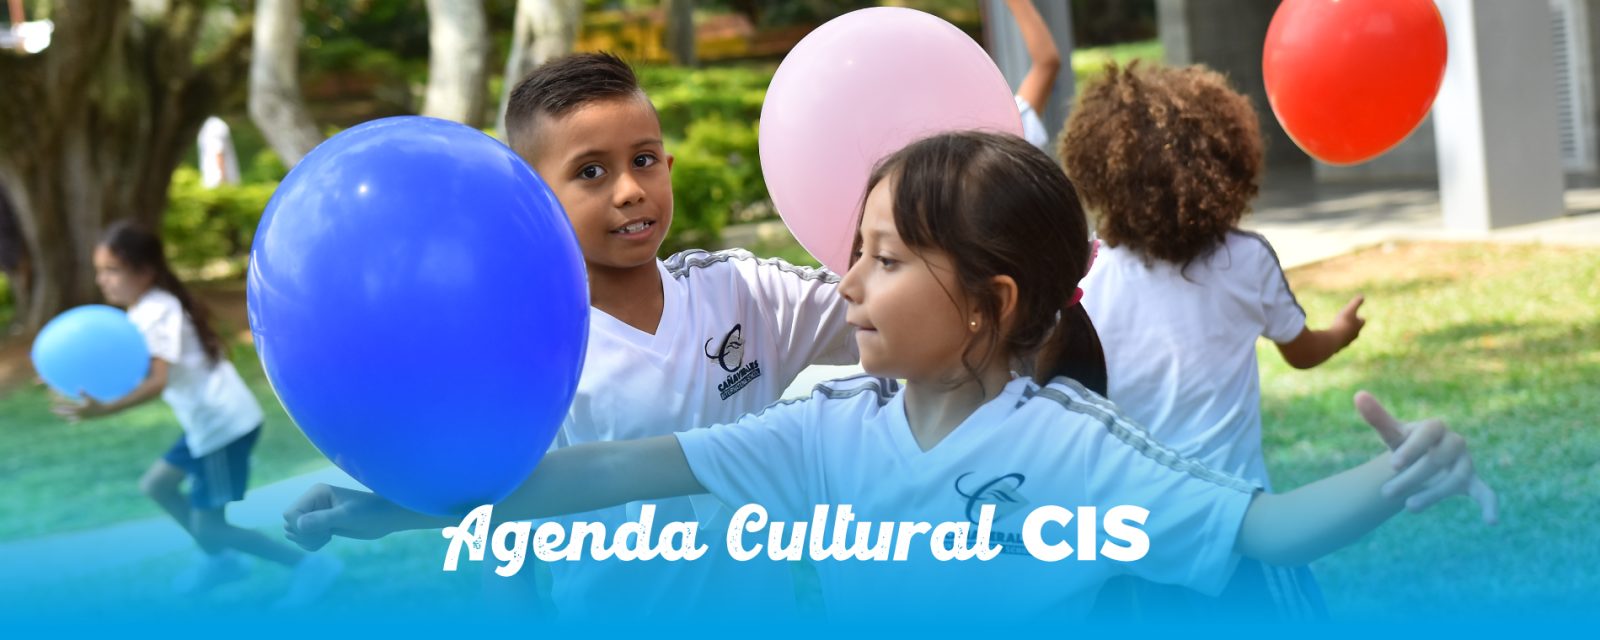 Img_agenda_cultural CIS